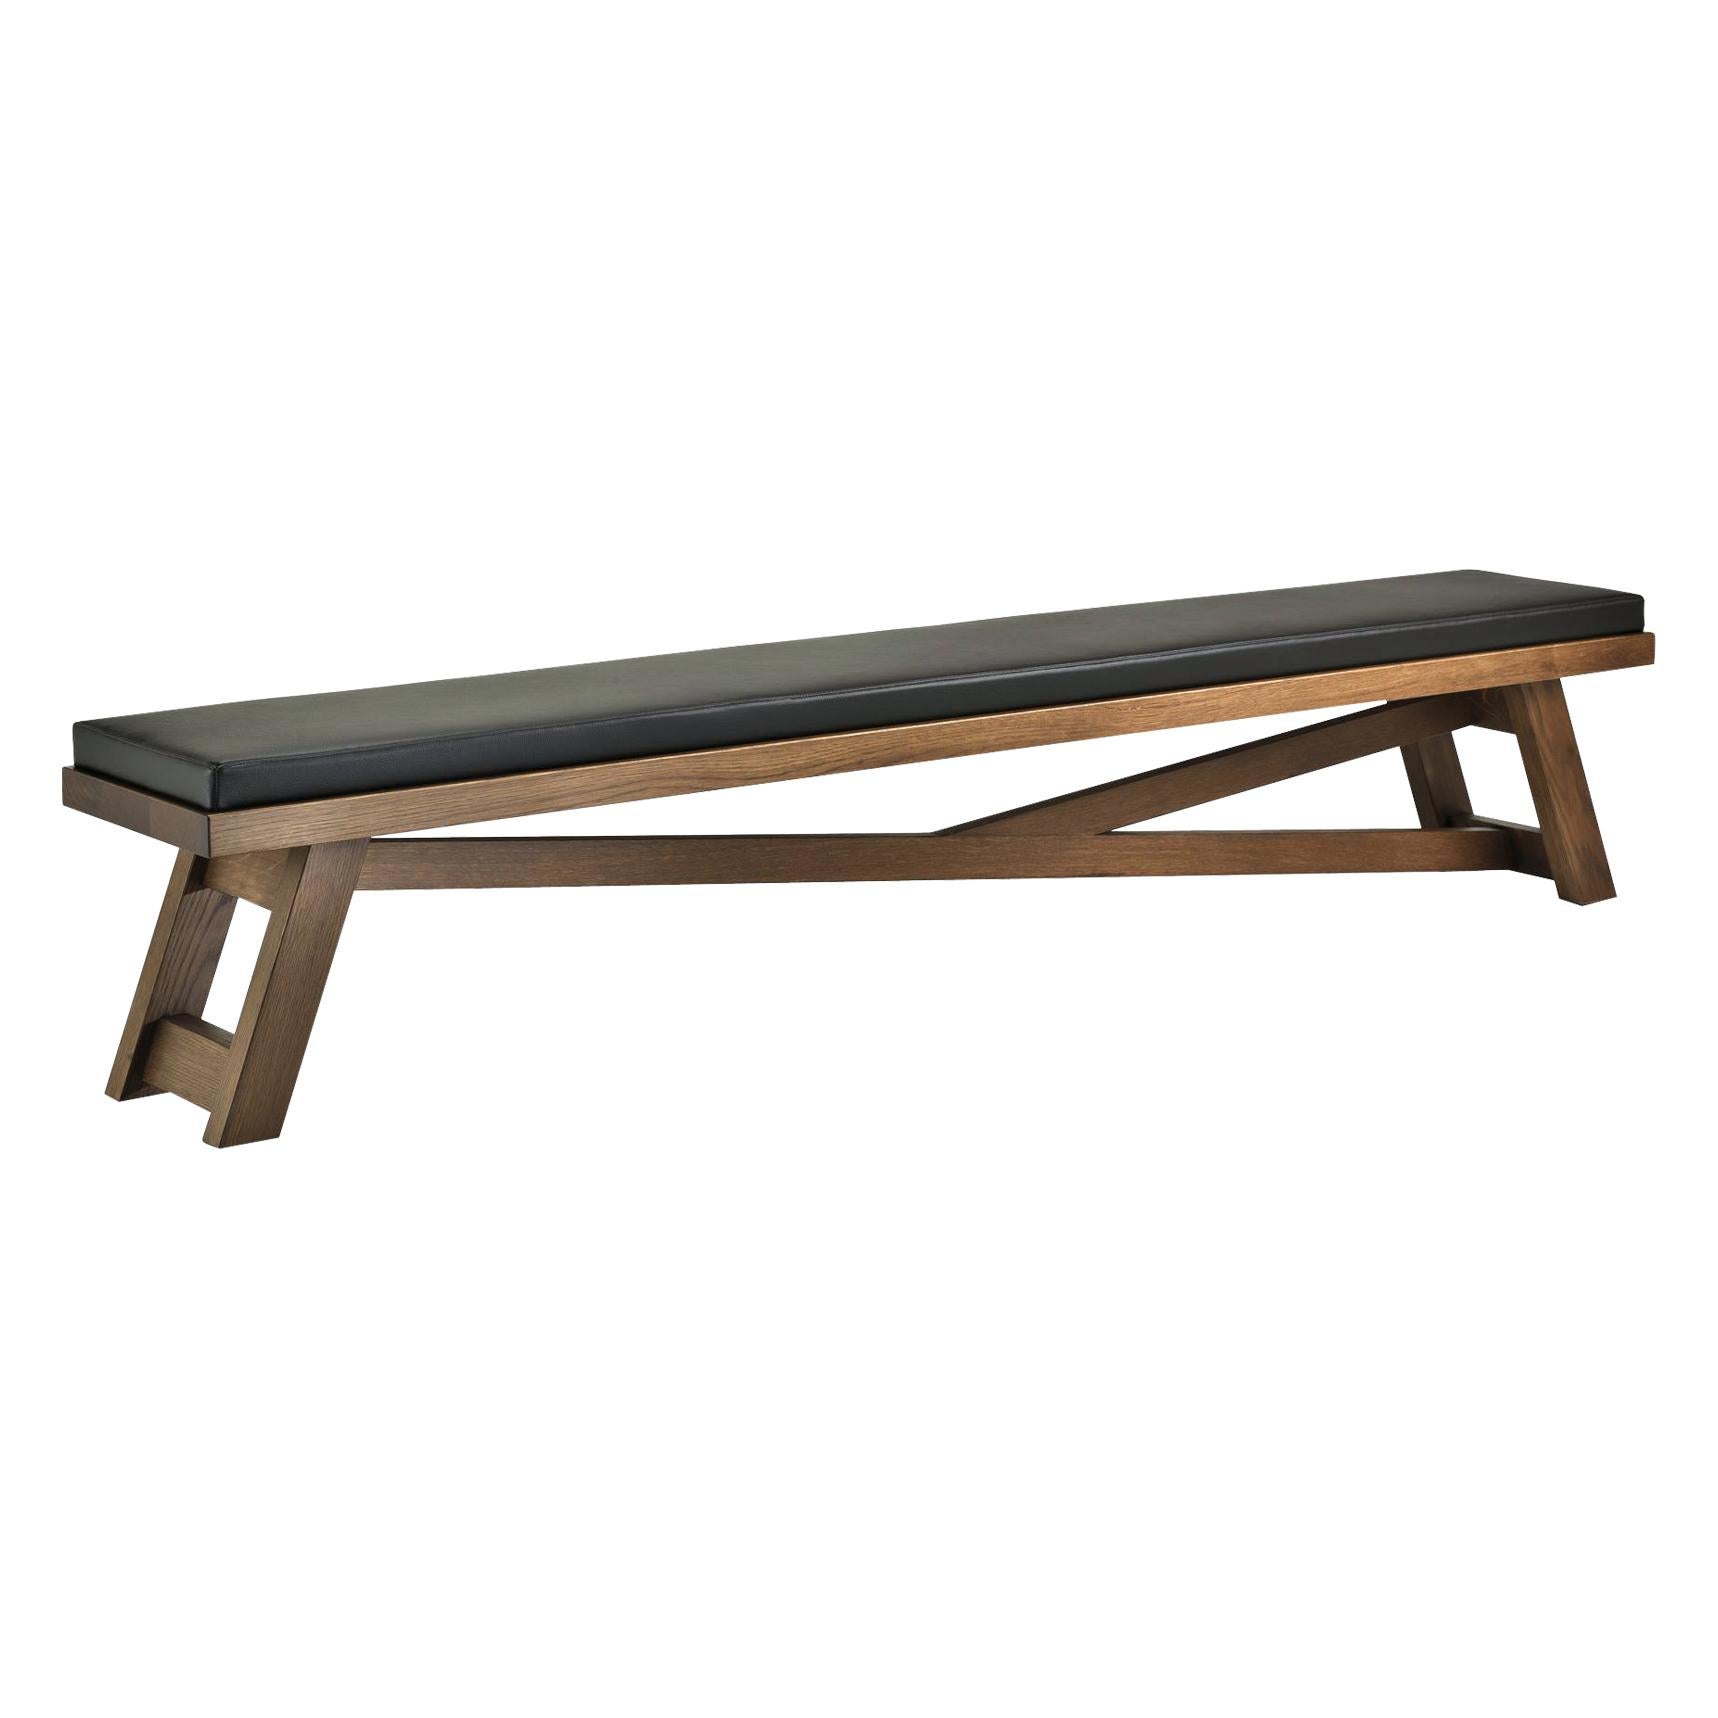 SILVANUS Black Solid Oak Long Bench with Upholstered Seat (Banc long en chêne massif avec assise rembourrée)